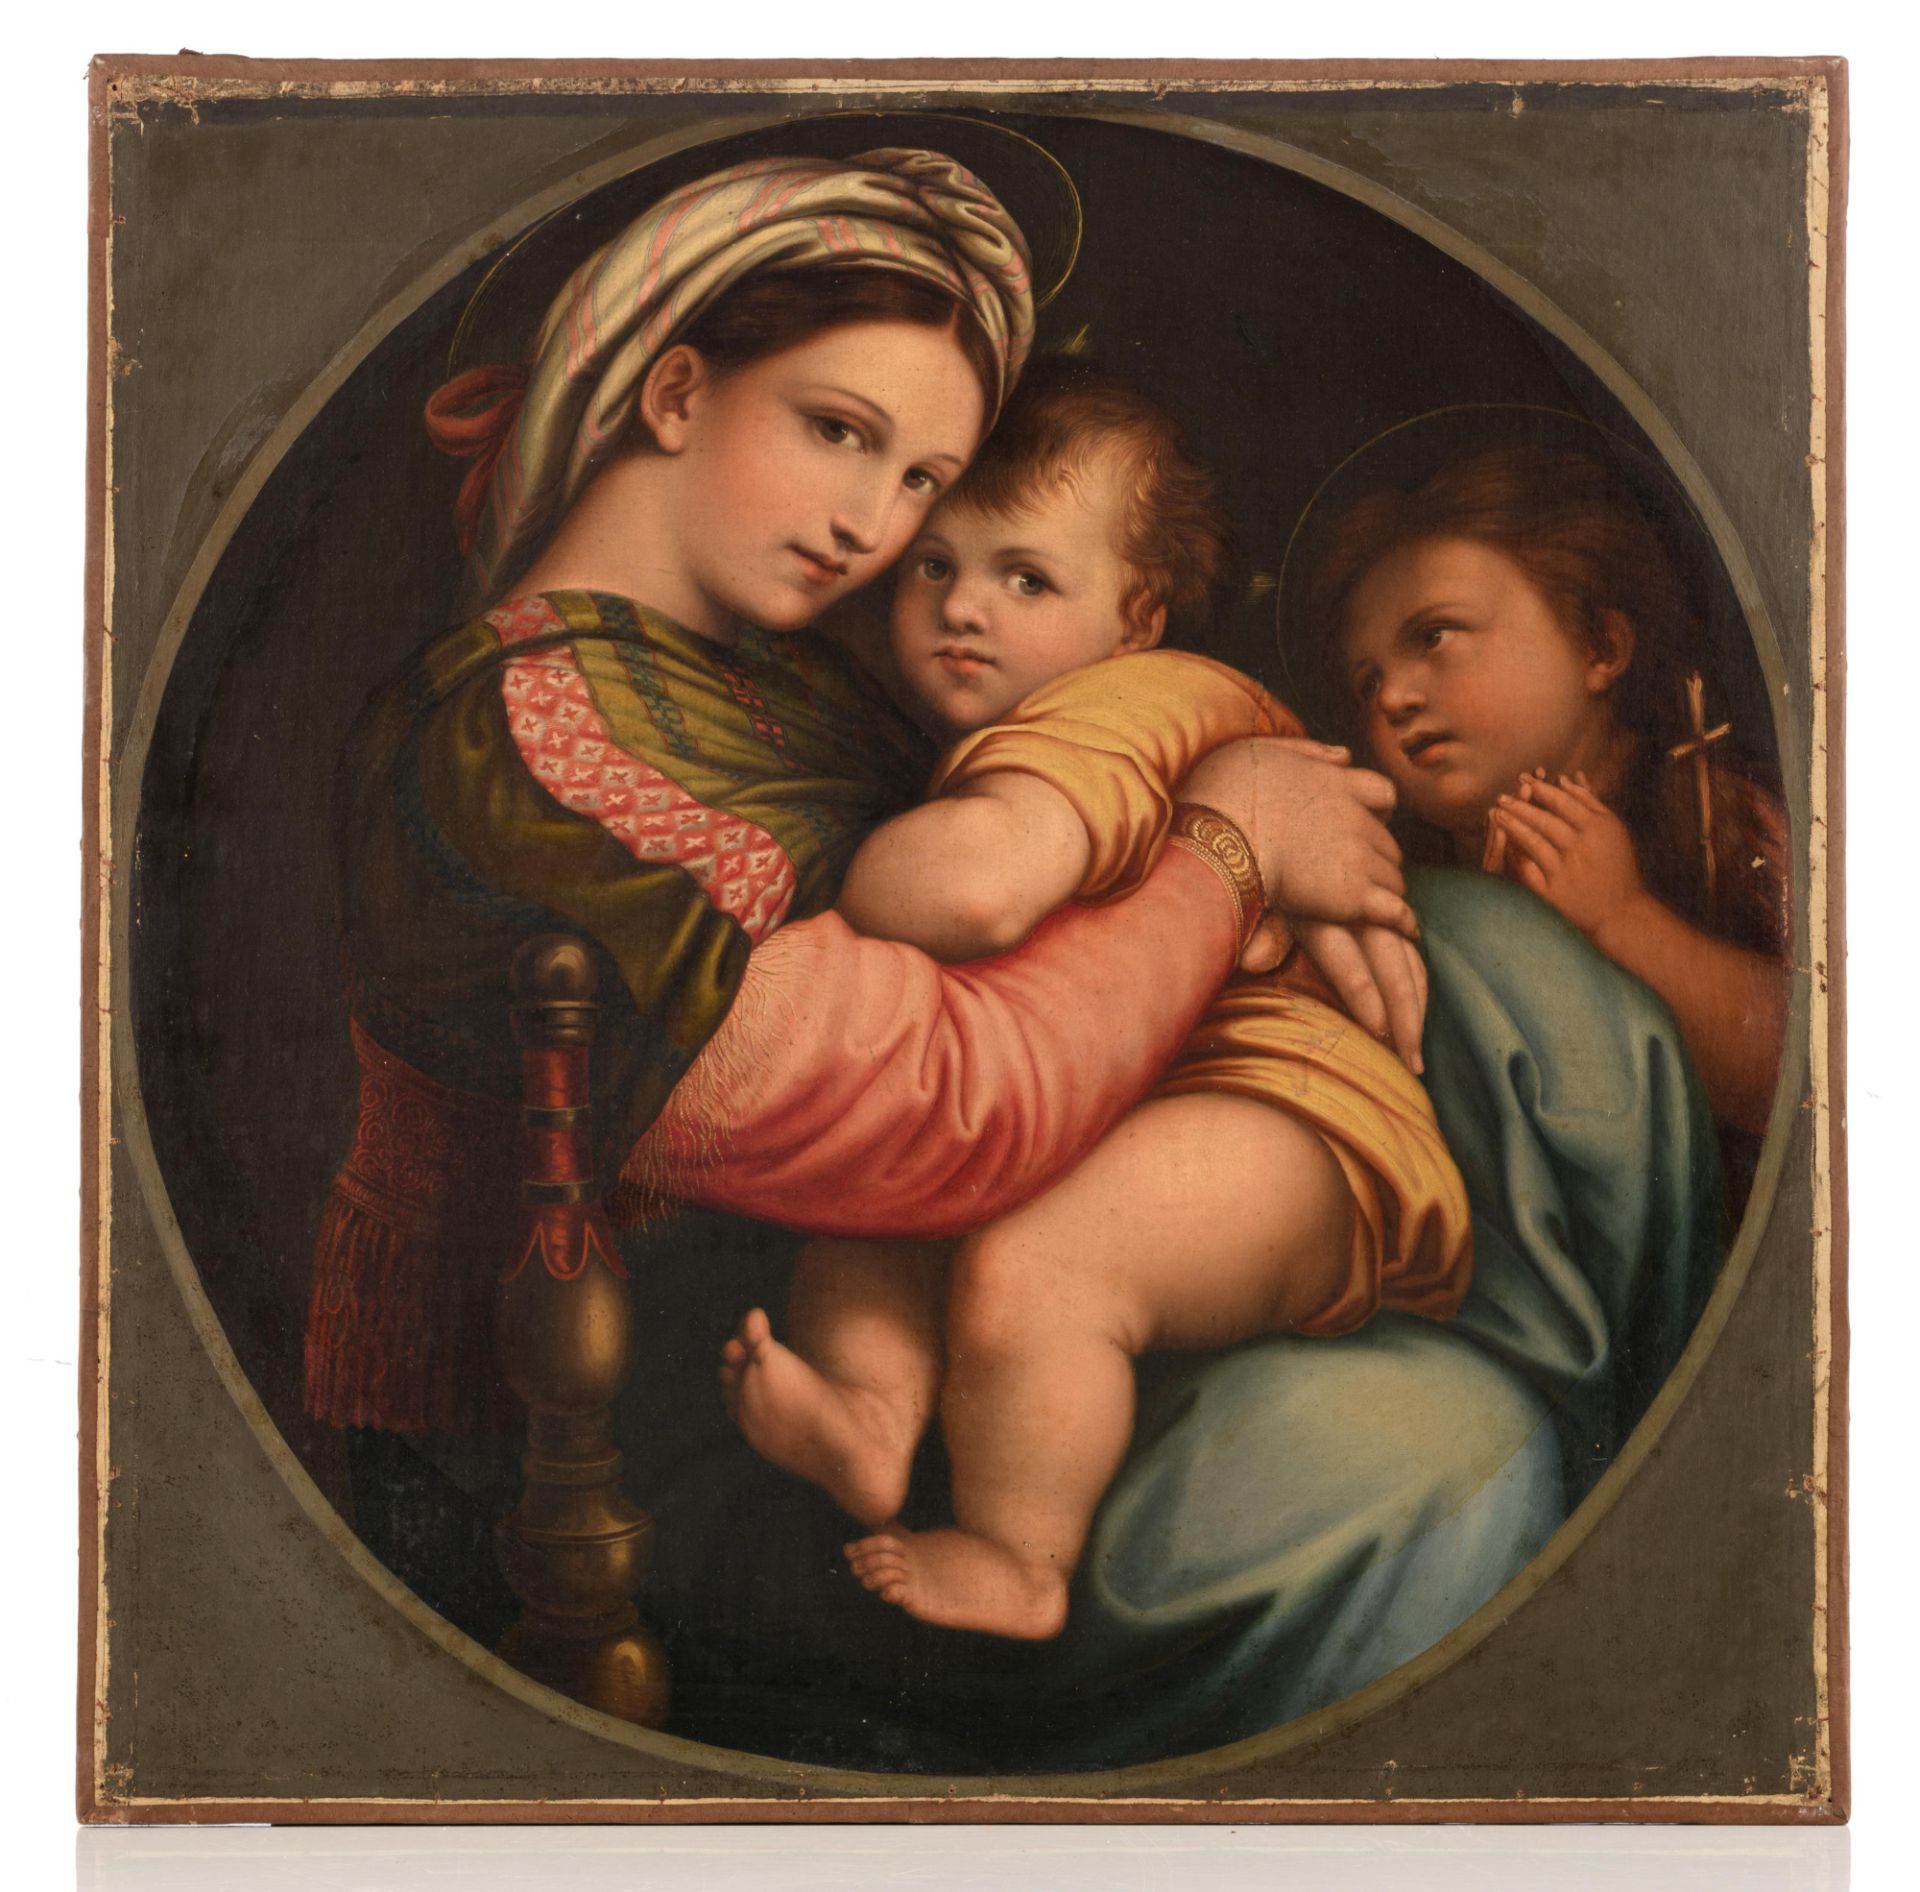 A copy of the 'Madonna della seggiola' by Raphael, 80 x 80 cm - Image 2 of 5